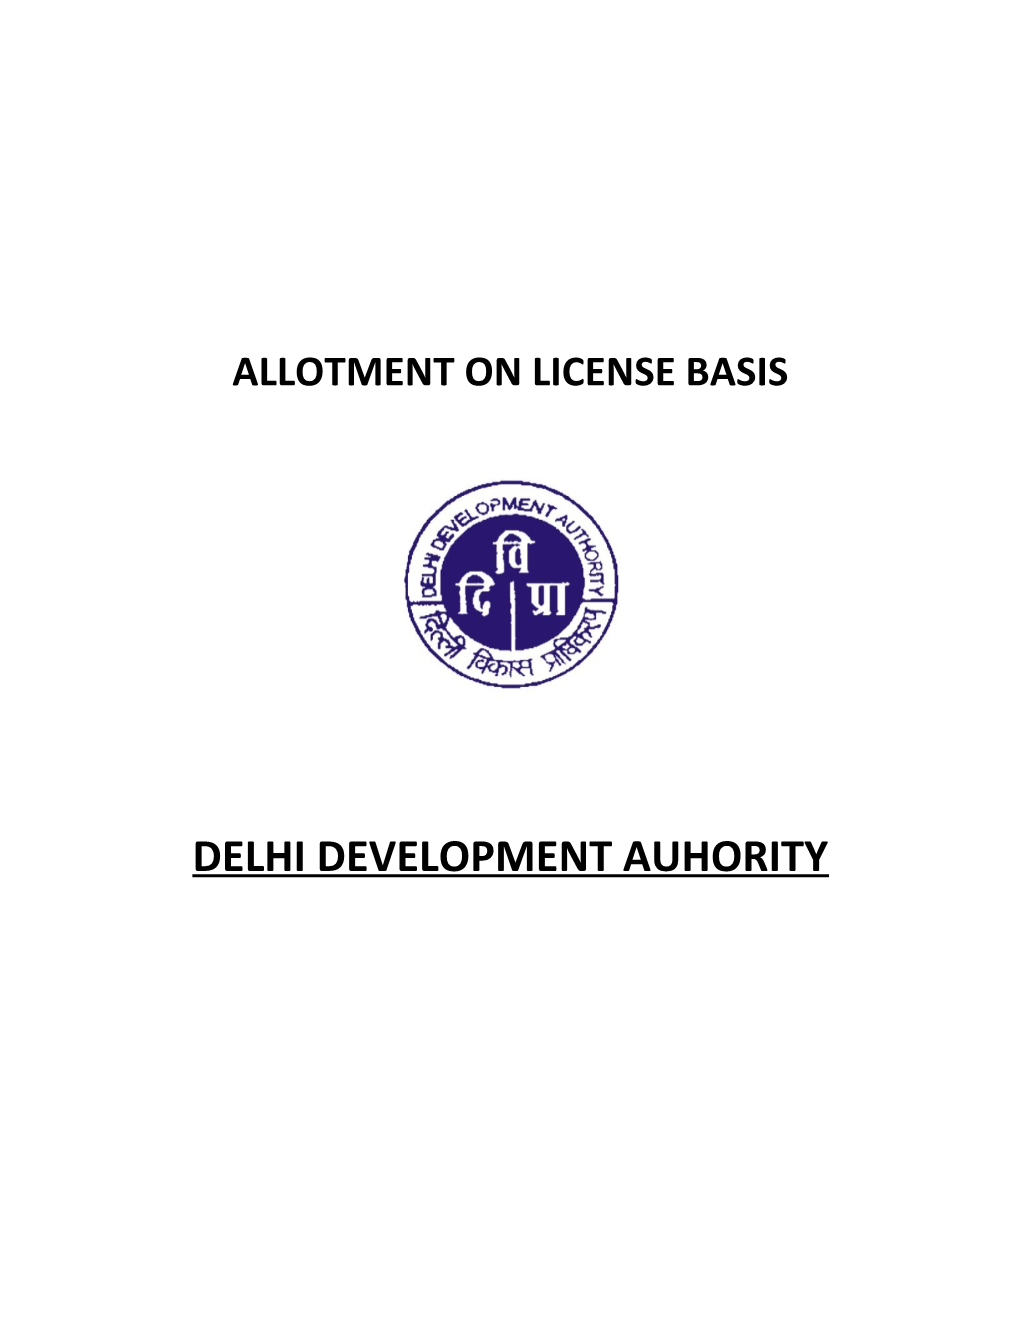 Allotment on License Basis